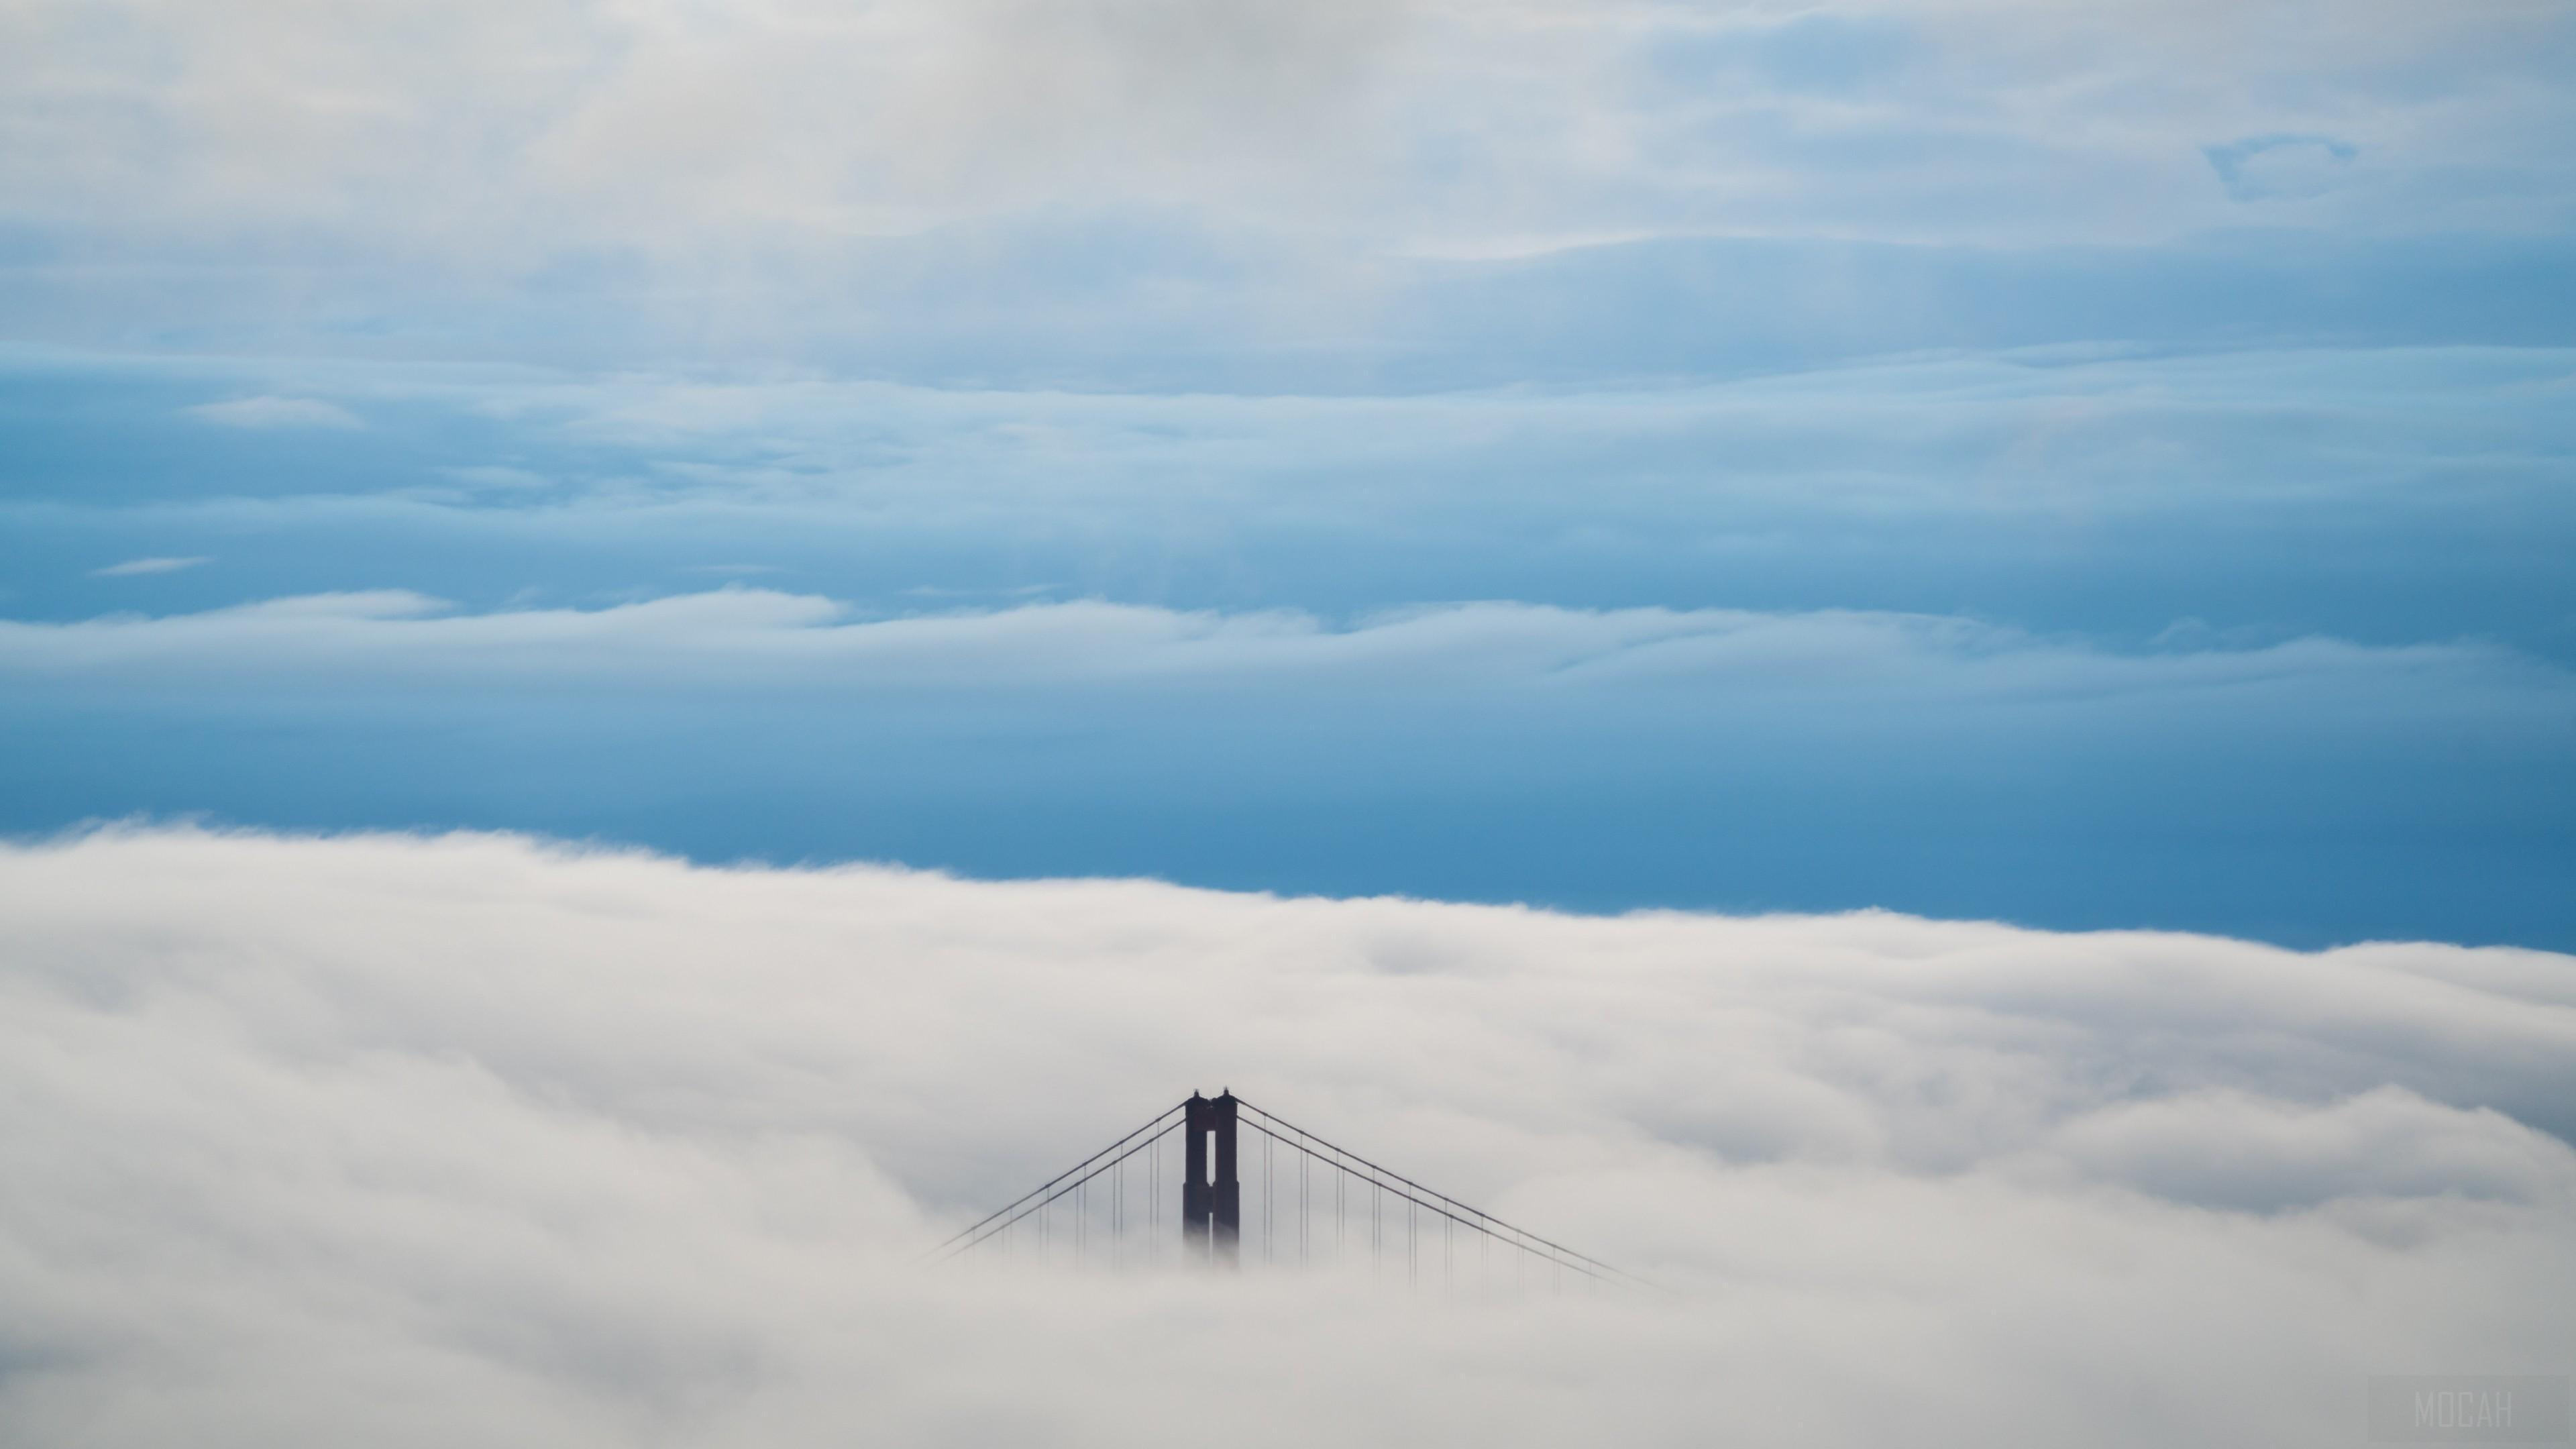 HD wallpaper, Aerial View Of Bridge Under Clouds 4K